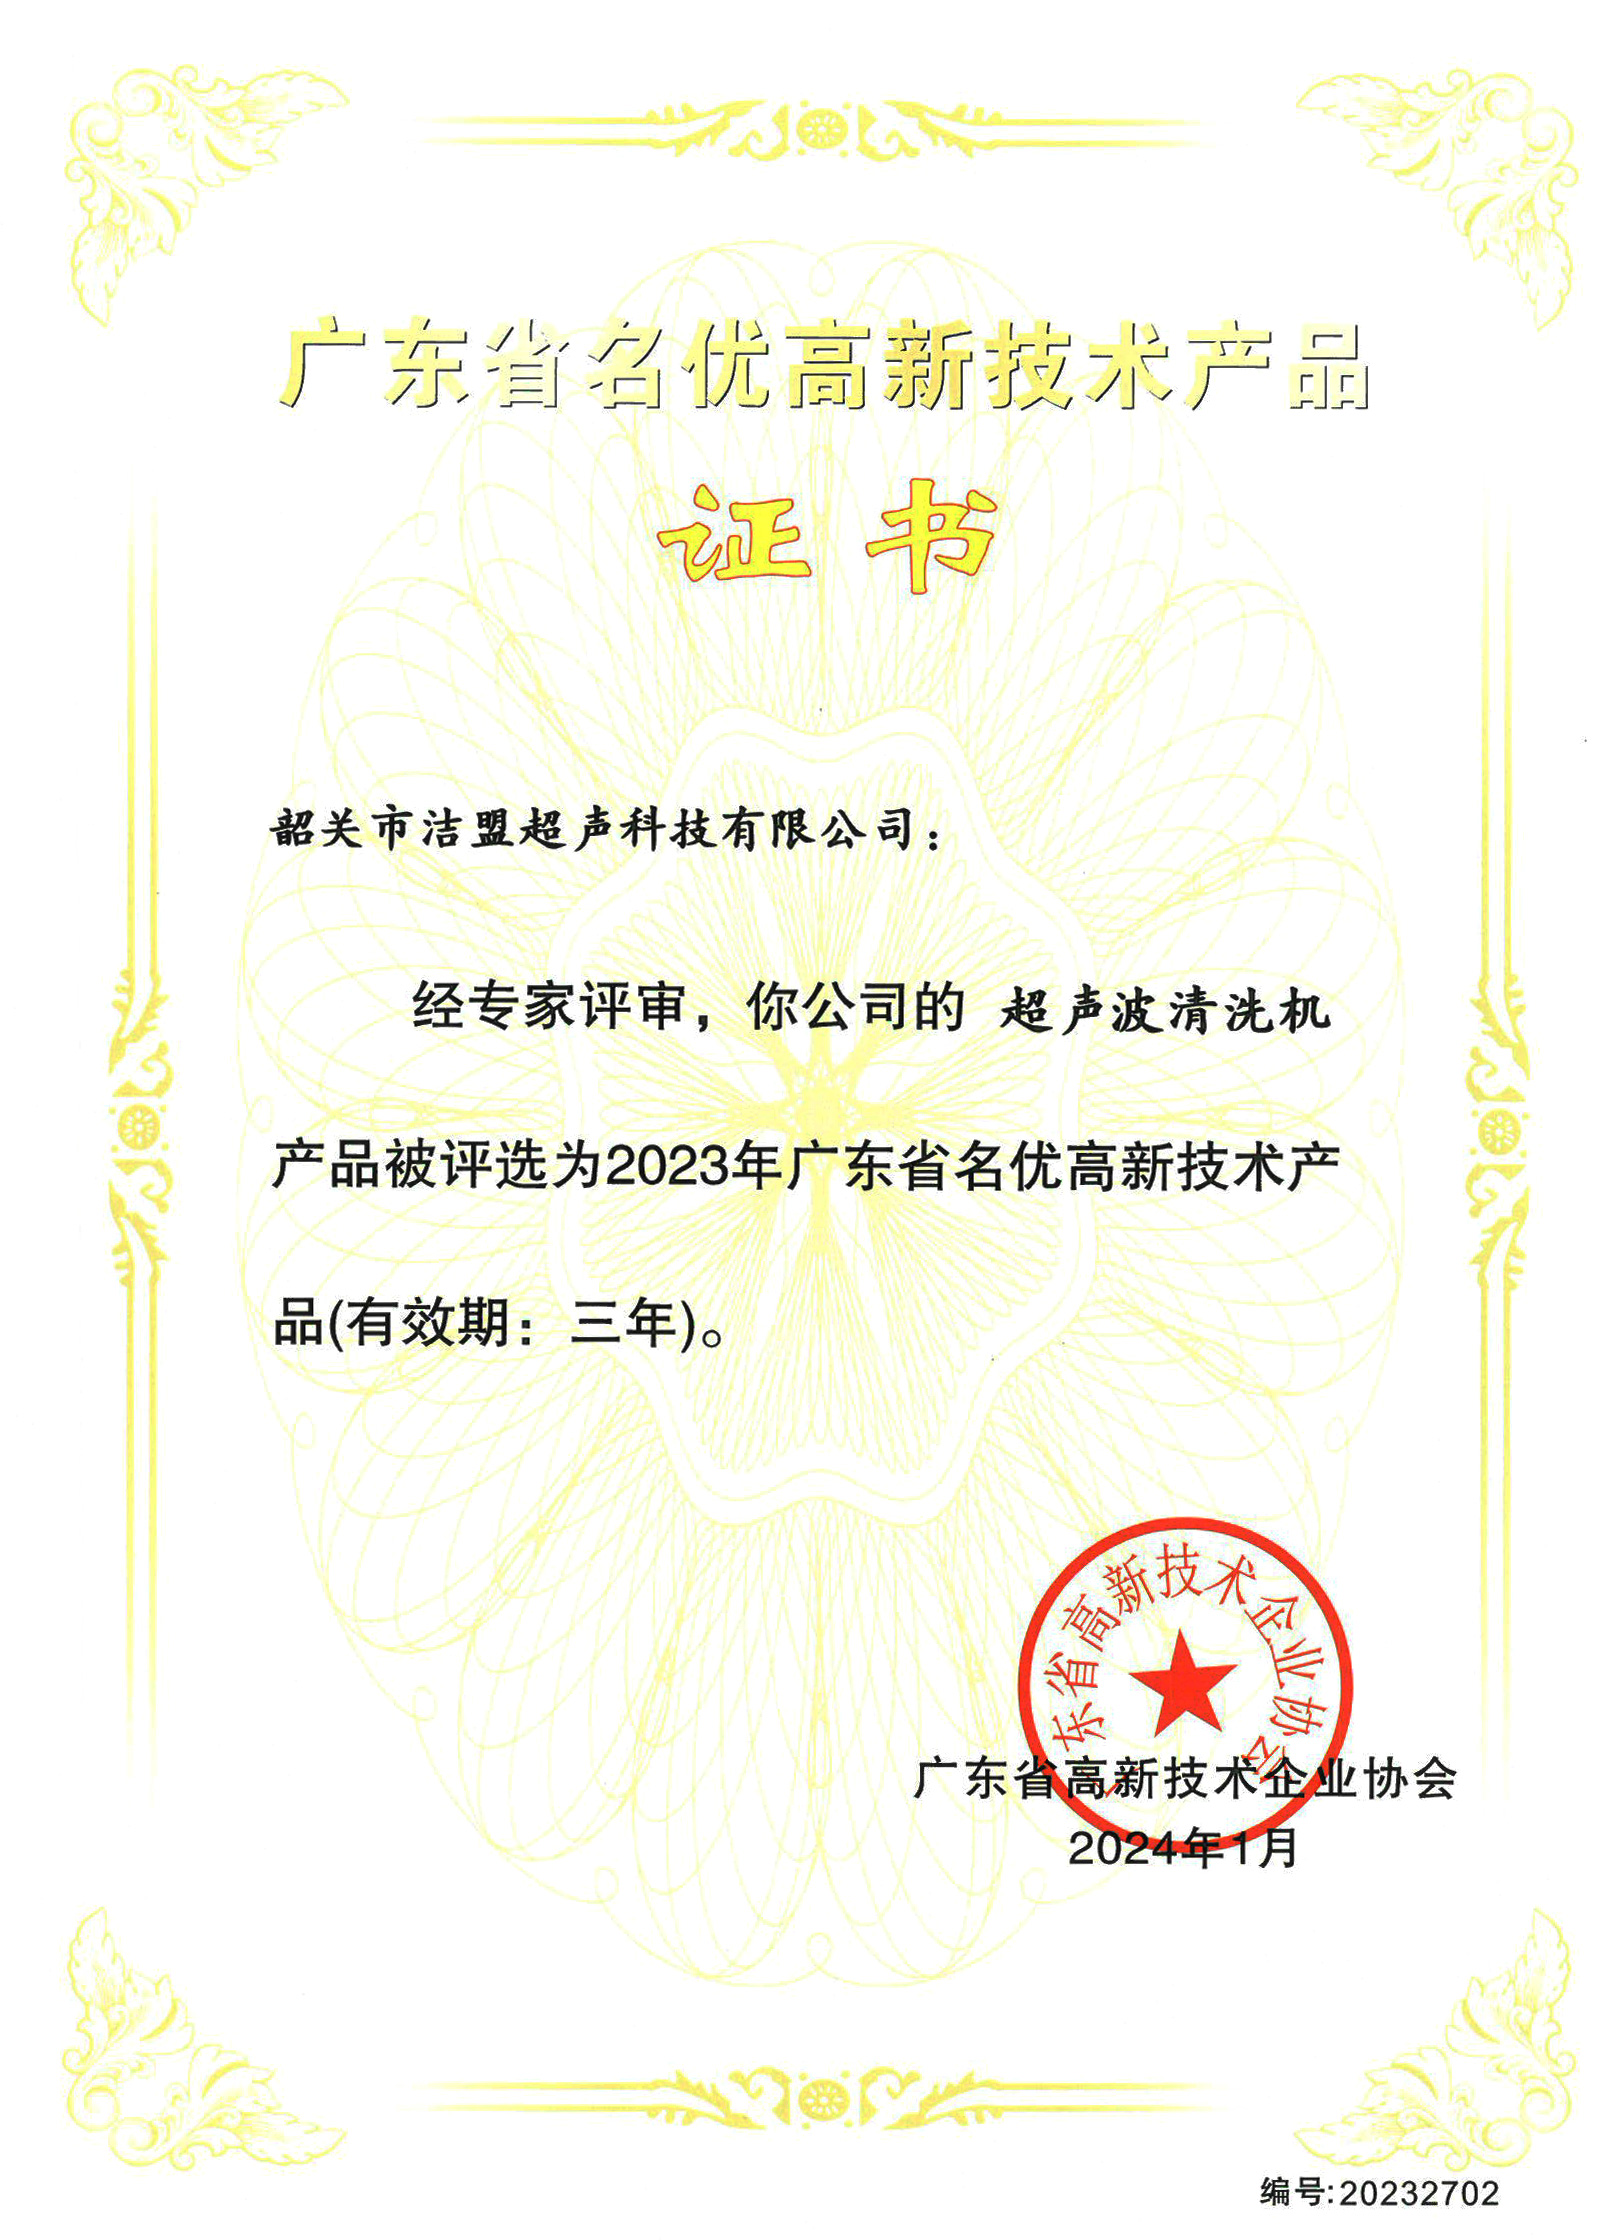 Shaoguan Skymen Ultrasound Technology Co., Ltd. Certificado de producto de alta tecnología famoso de la provincia de Guangdong